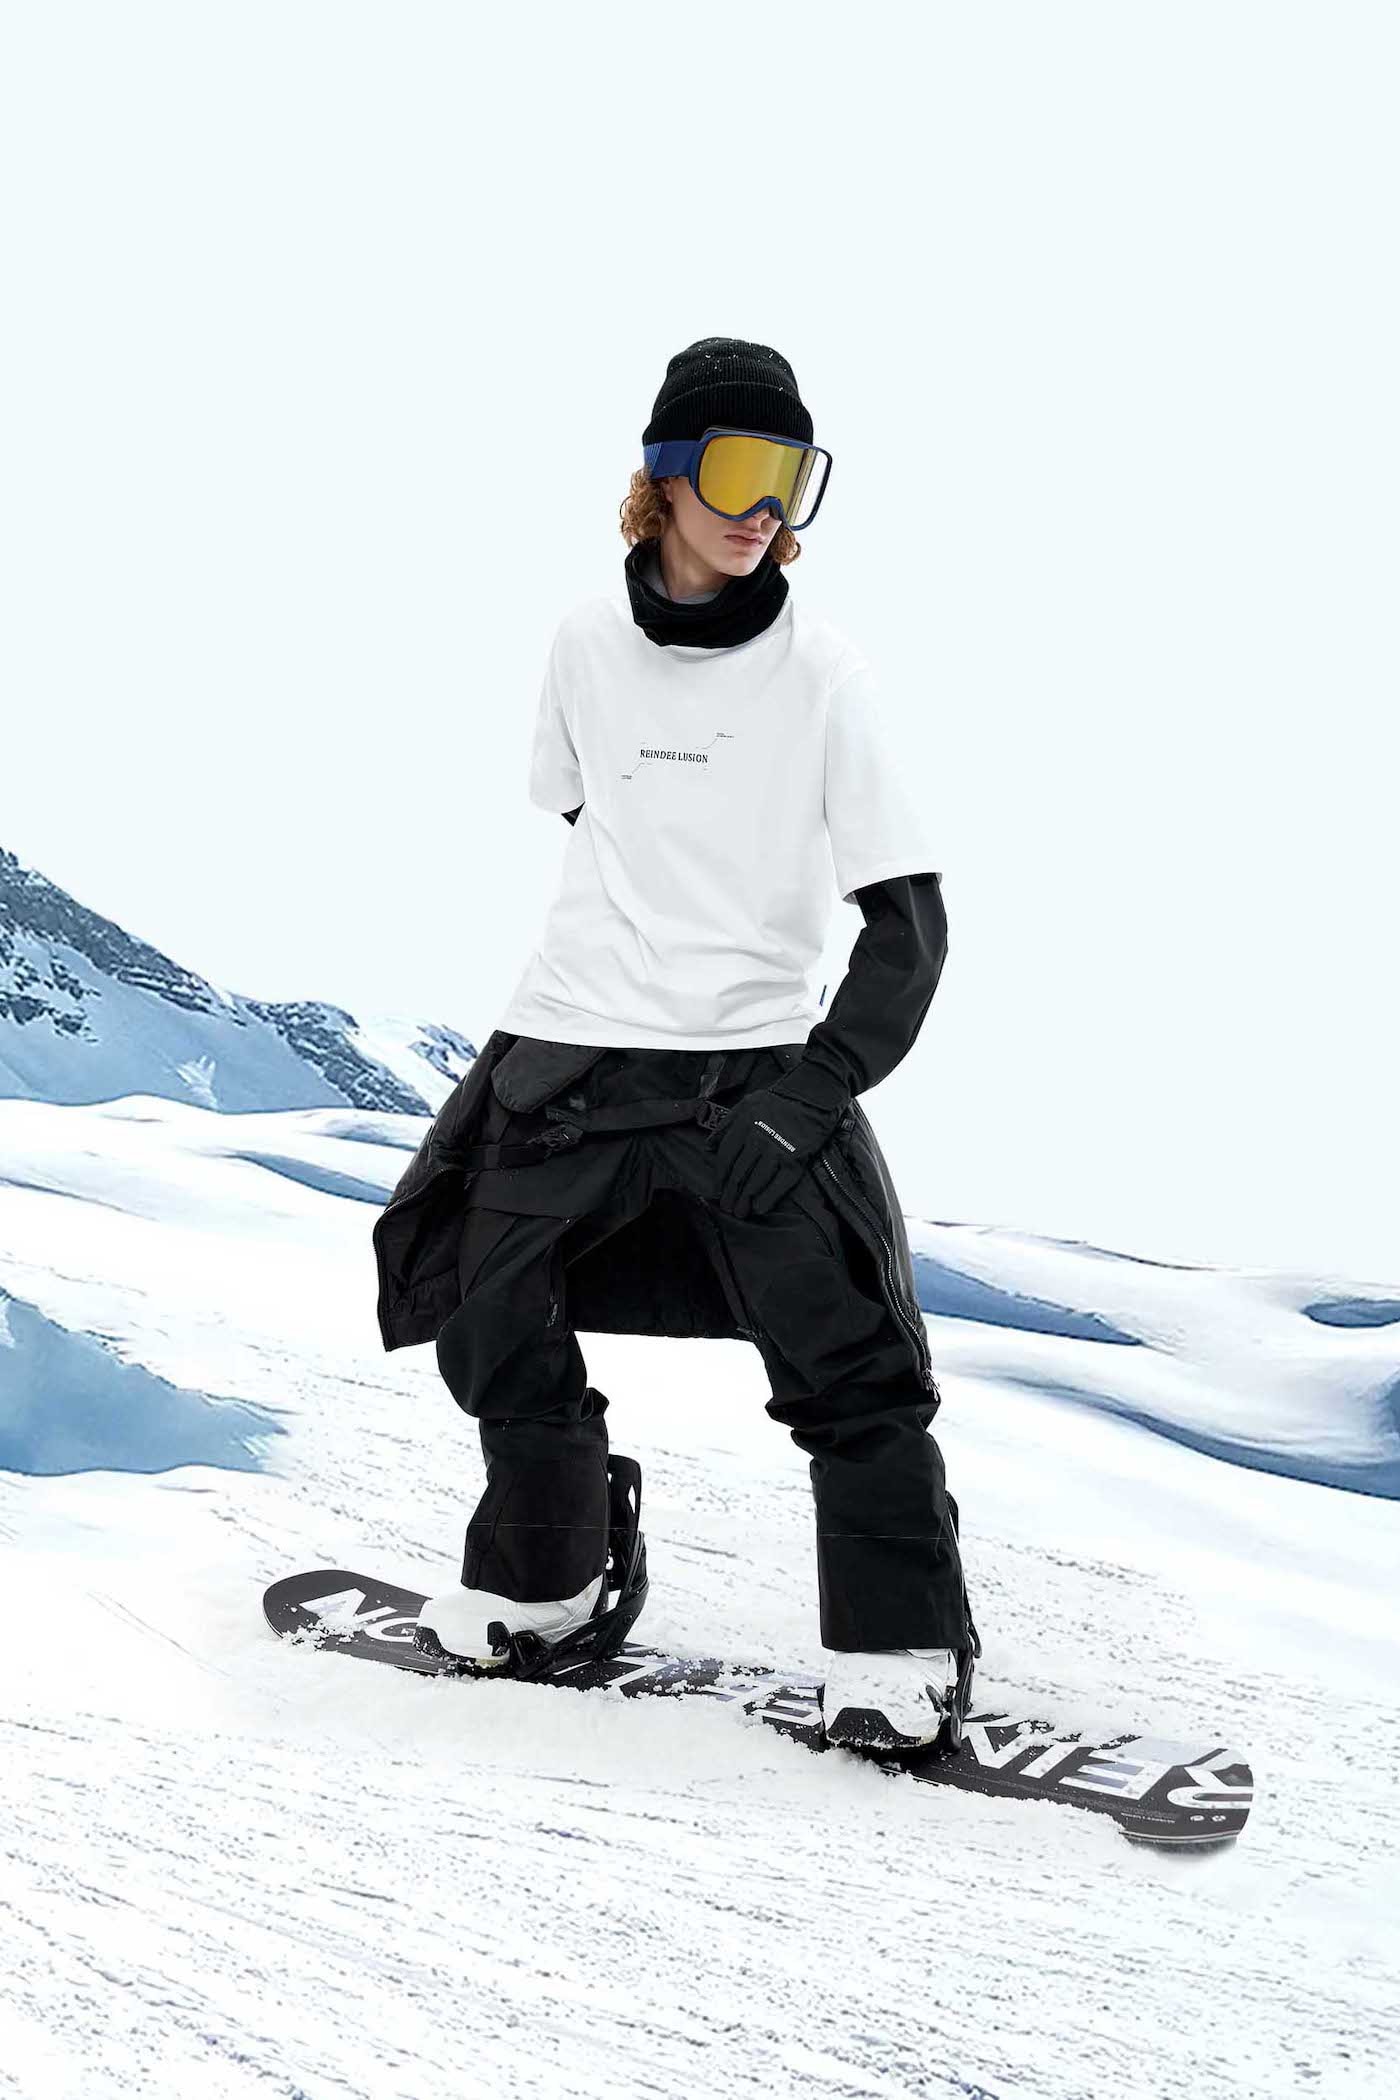 REINDEE LUSION 发布 2022 秋冬滑雪系列造型特辑